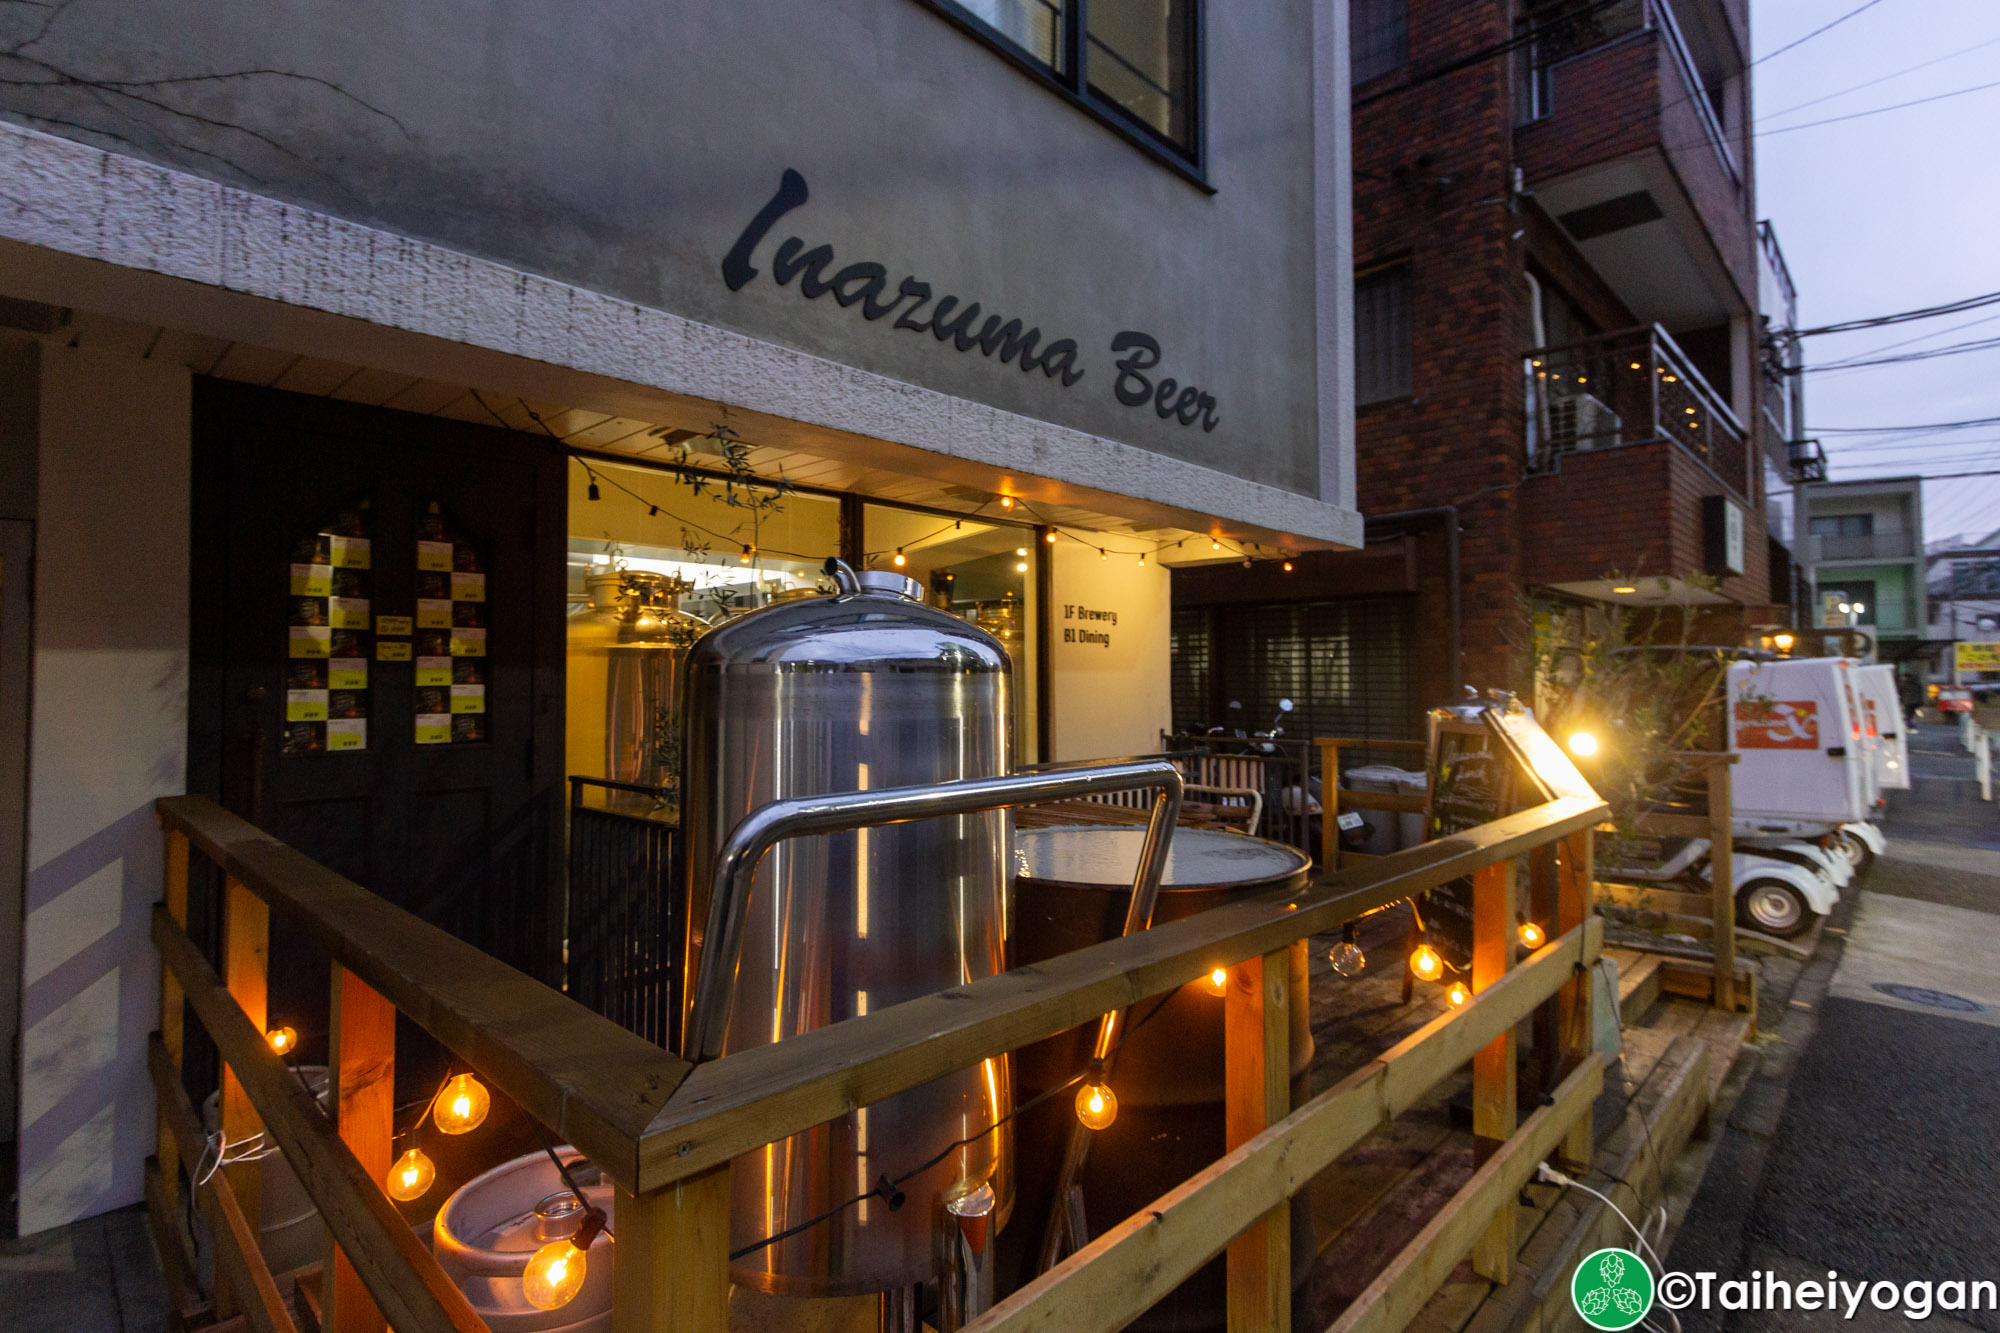 Inazuma Beer - Entrance